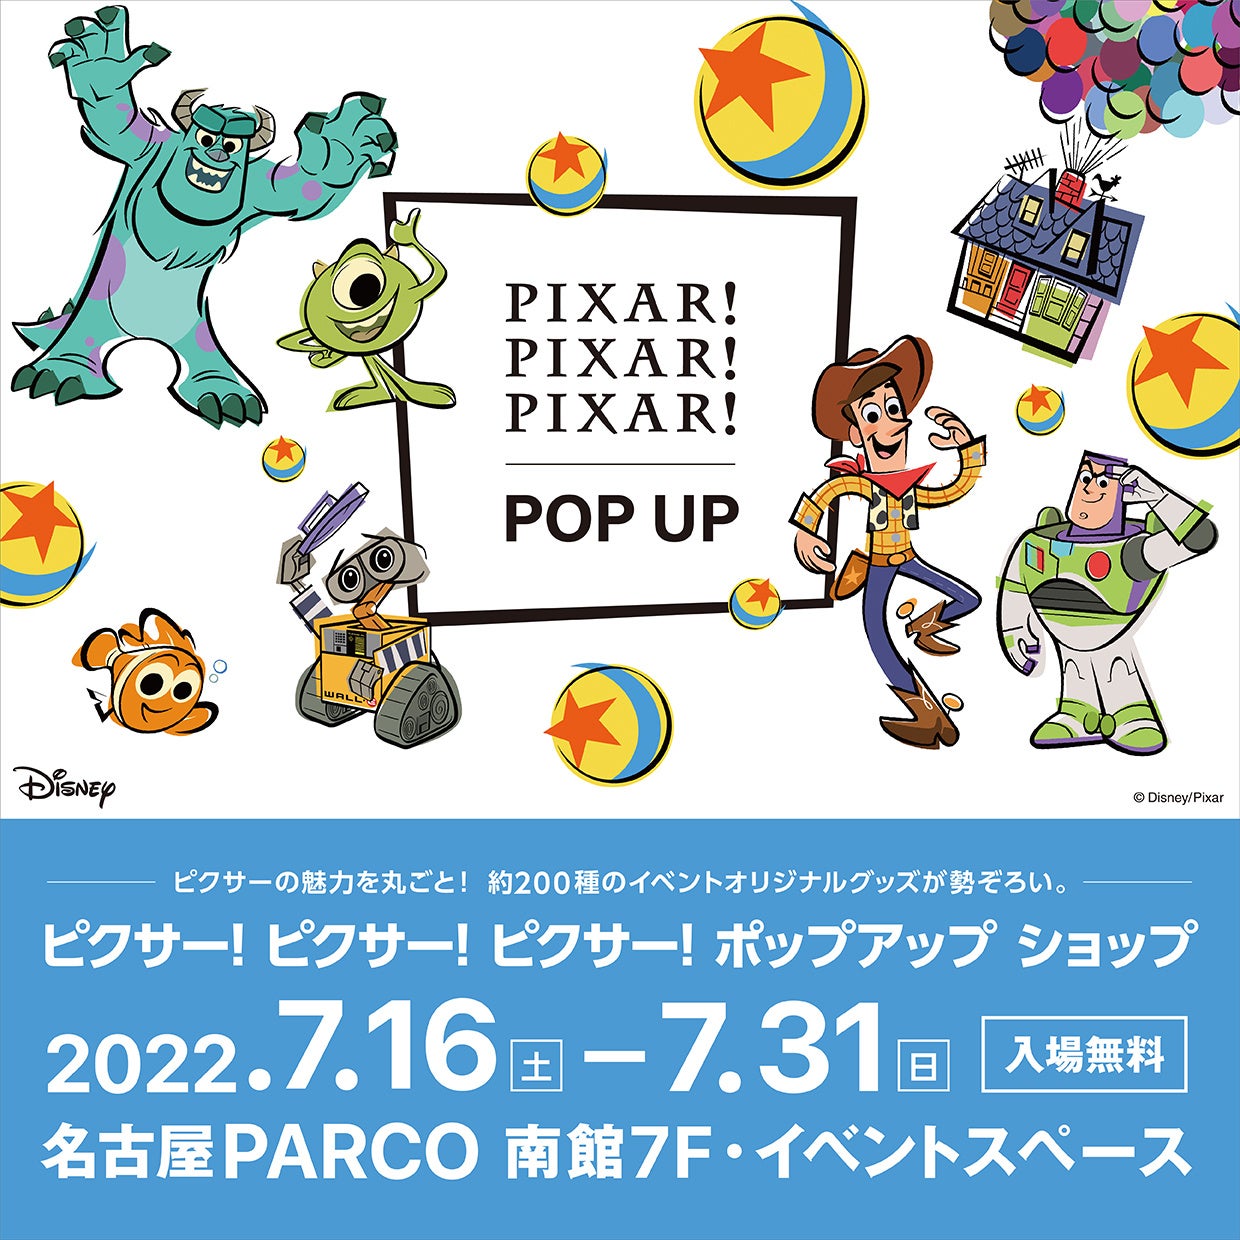 「PIXAR! PIXAR! PIXAR! POP UP」名古屋PARCOにて2022年7月16日(土)よりスタート！